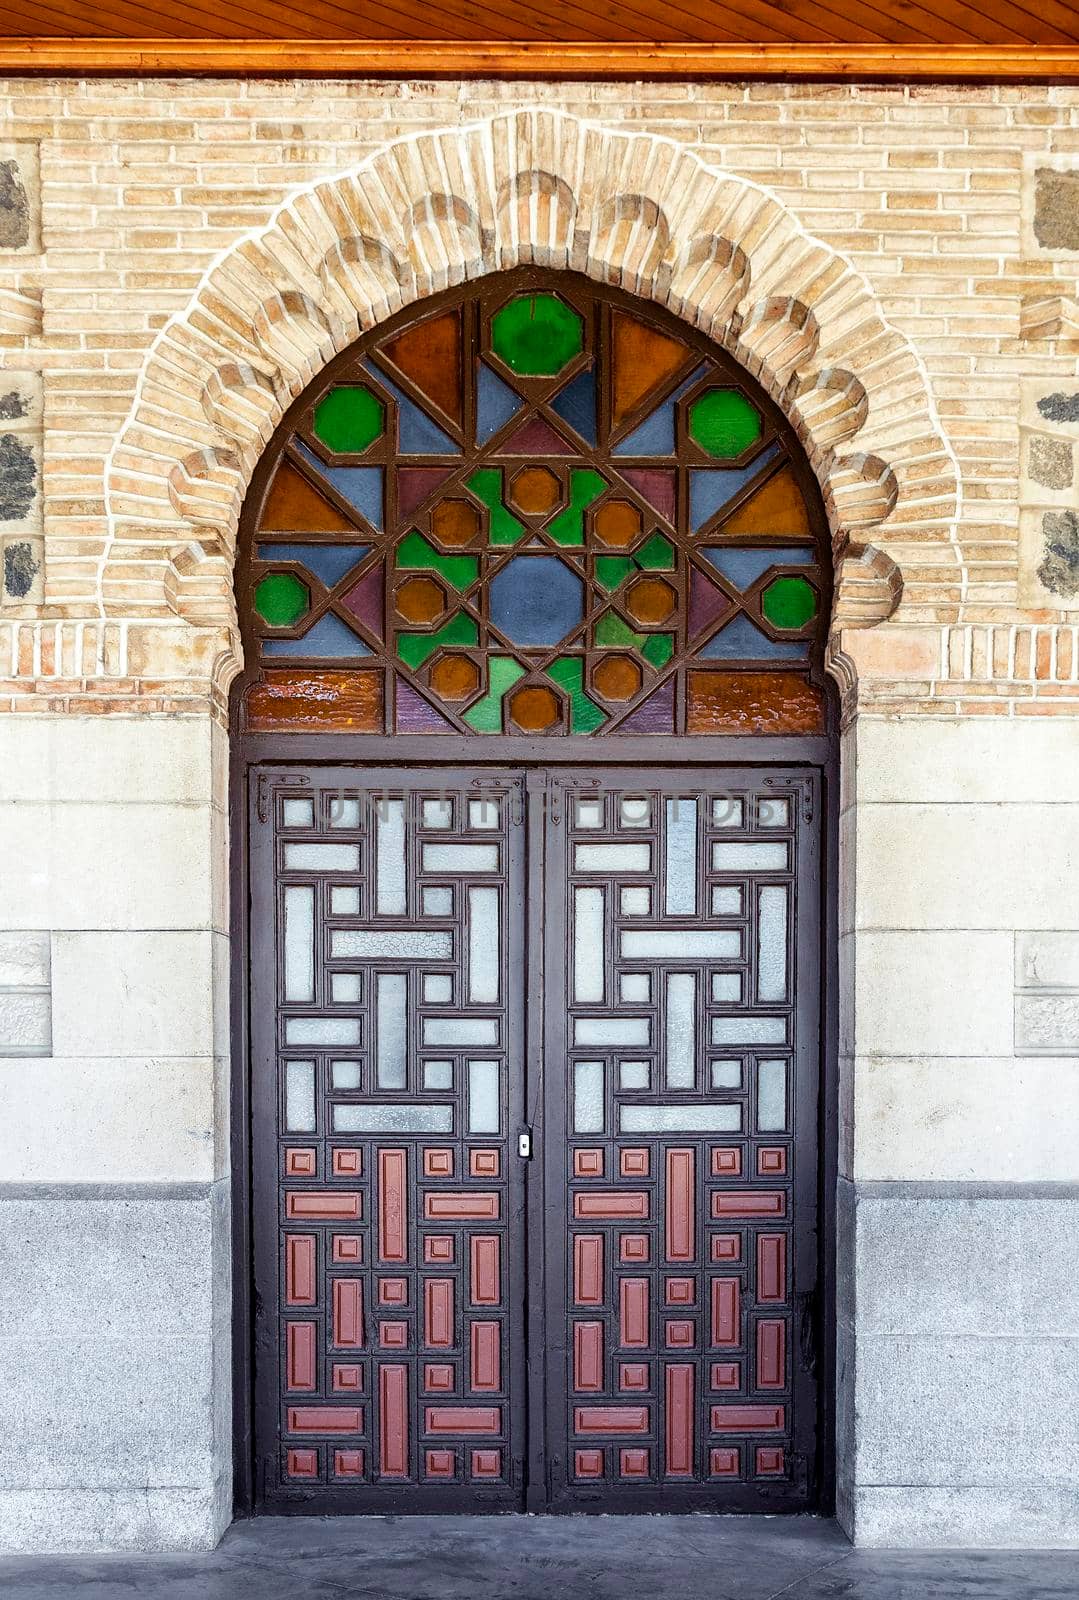 Ornate door in moorish style in Toledo railway station, Spain